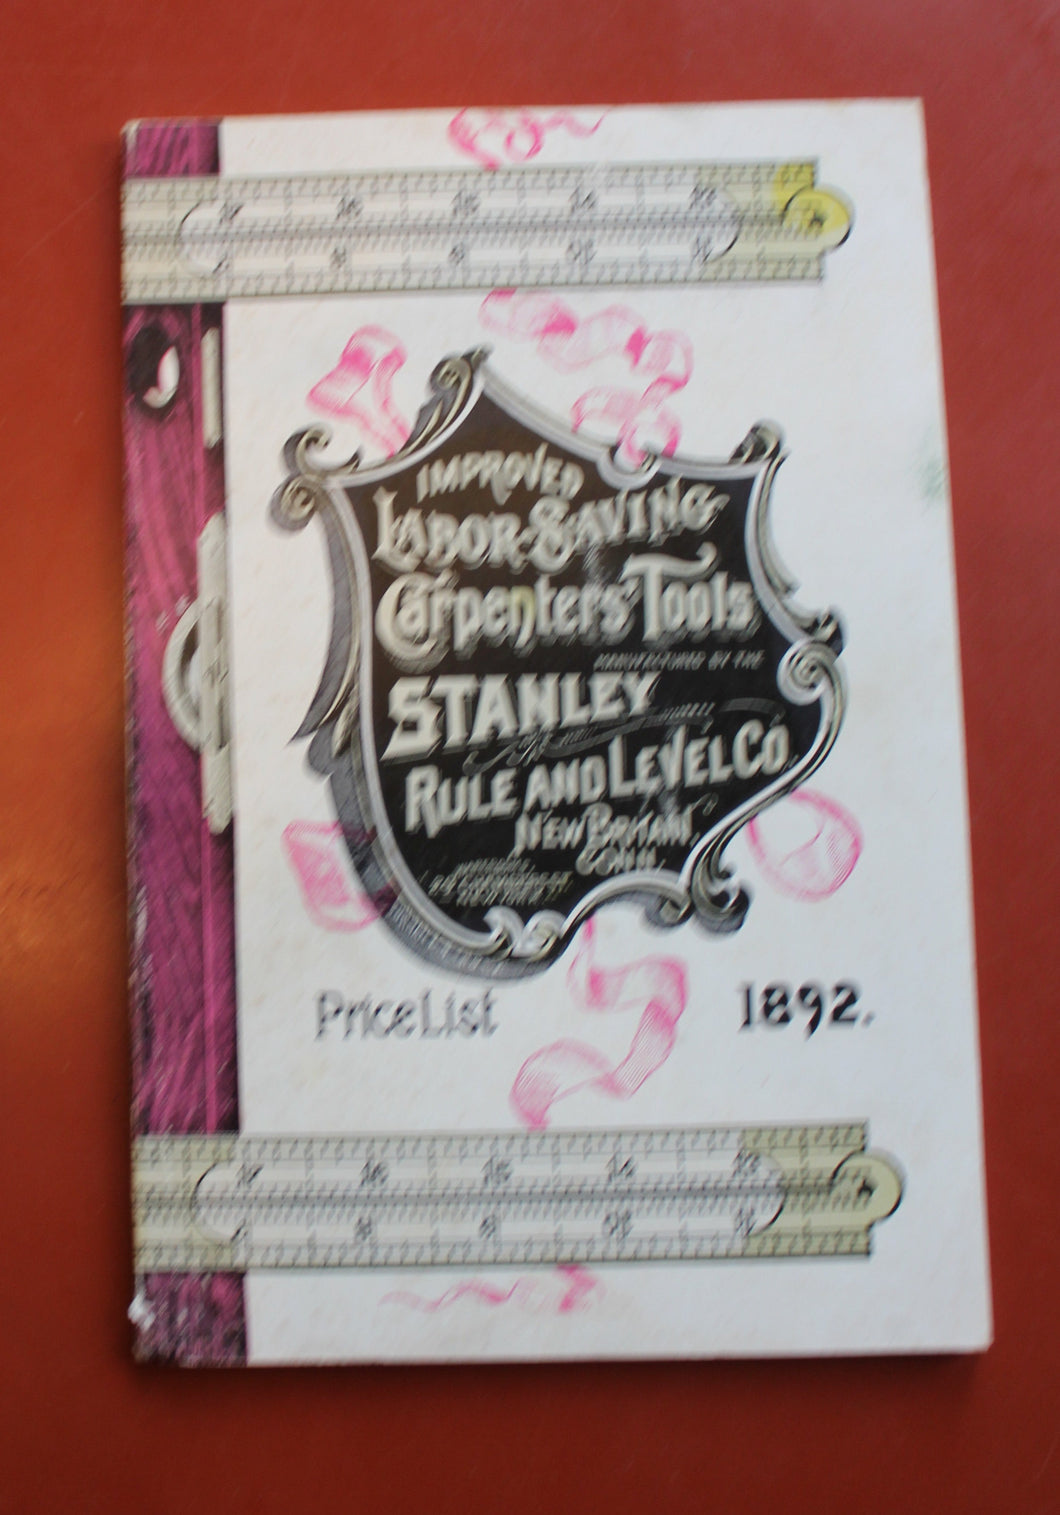 STANLEY 1892 Price list Reprint